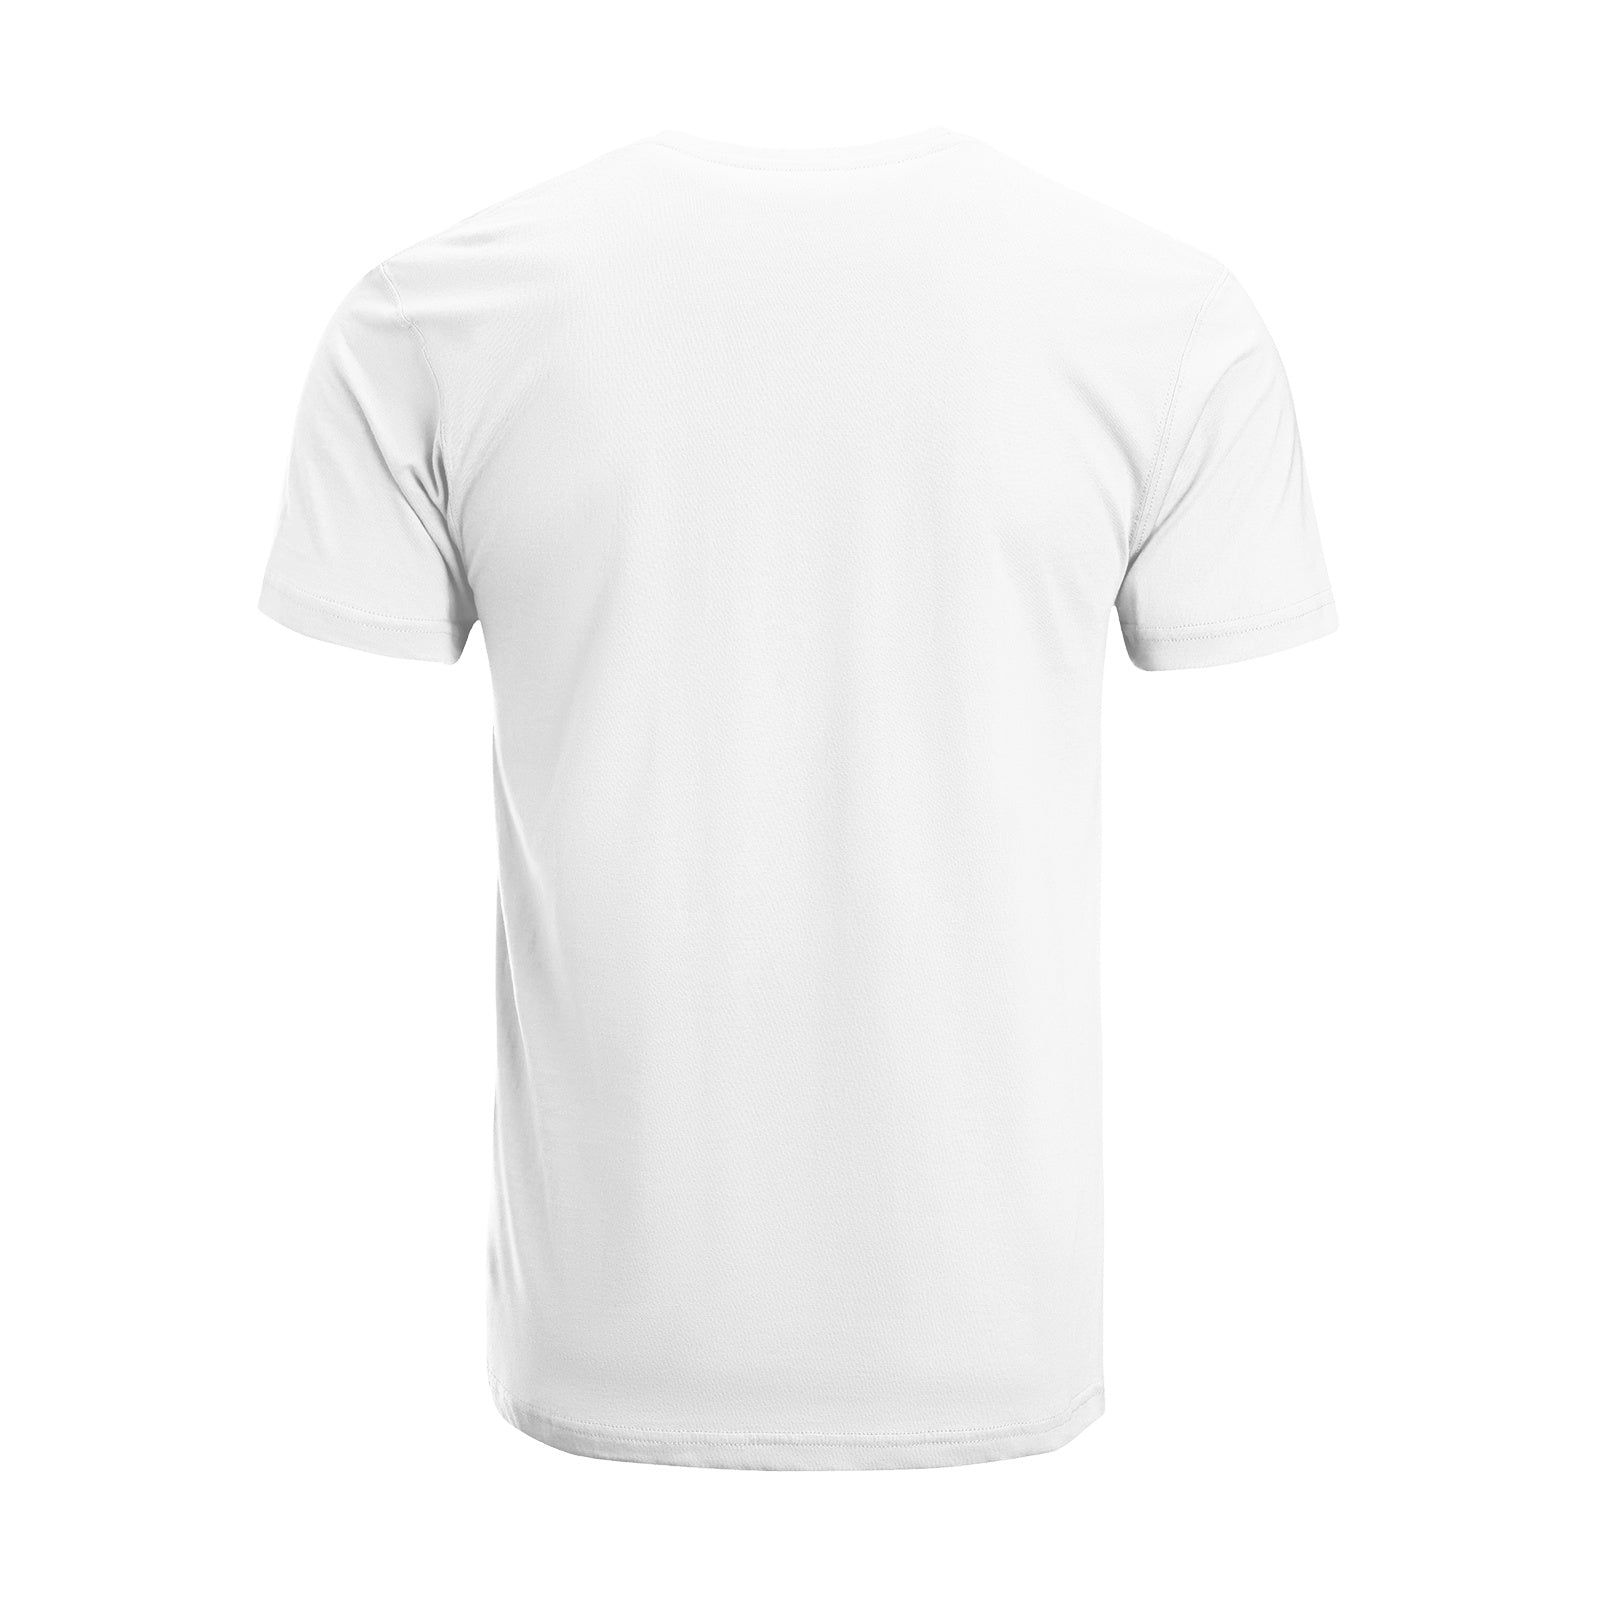 Unisex Short Sleeve Crew Neck Cotton Jersey T-Shirt CAT 37 - Tara-Outfits.com